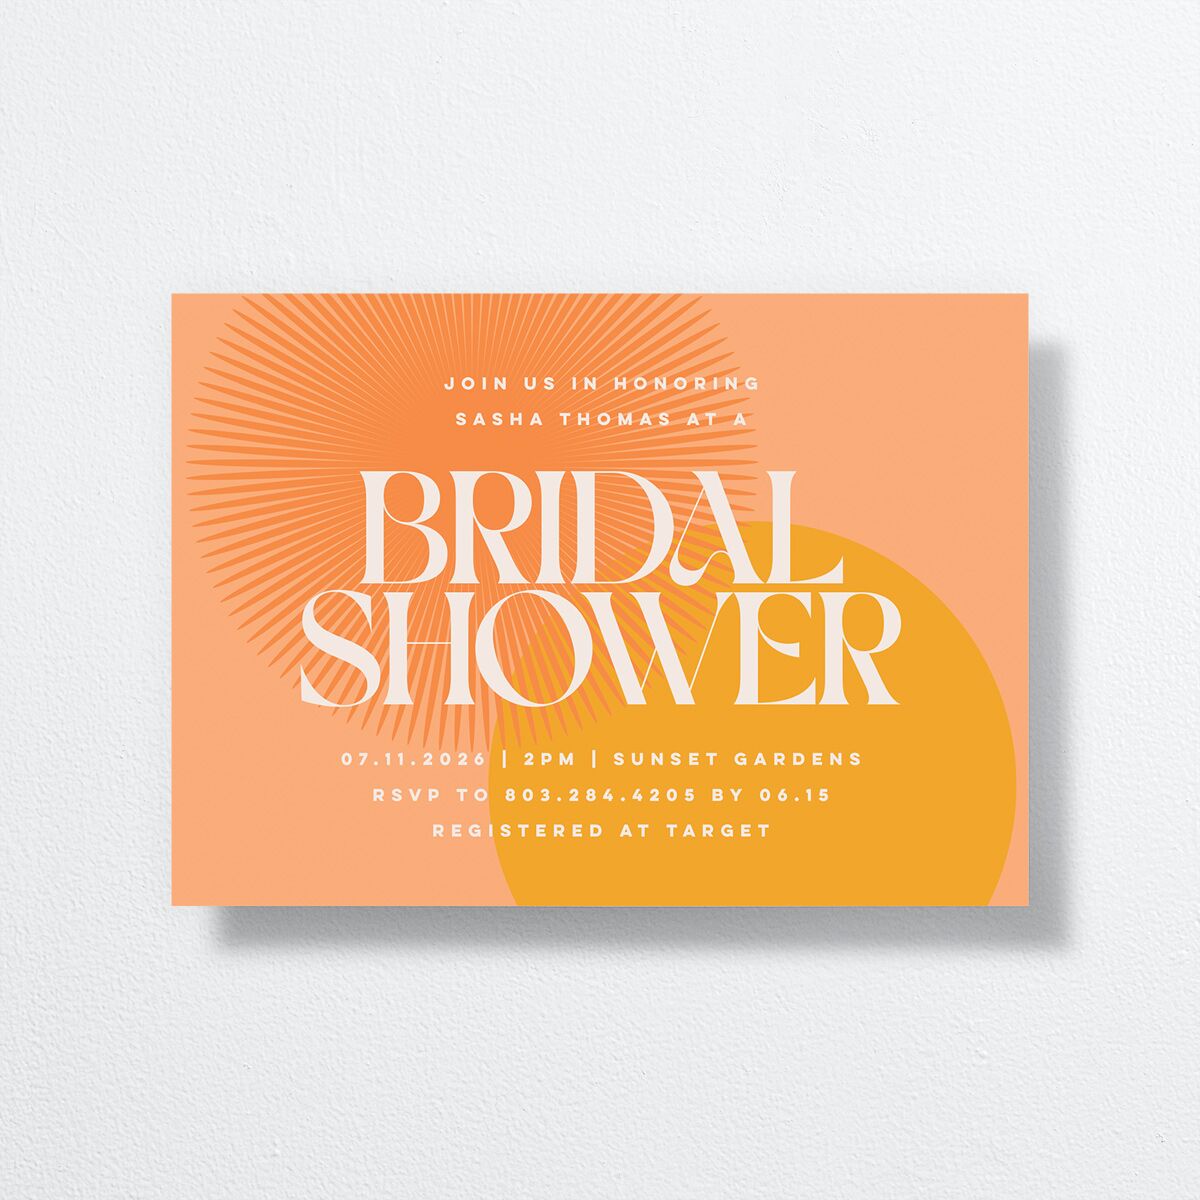 Retro Sunburst Bridal Shower Invitations front